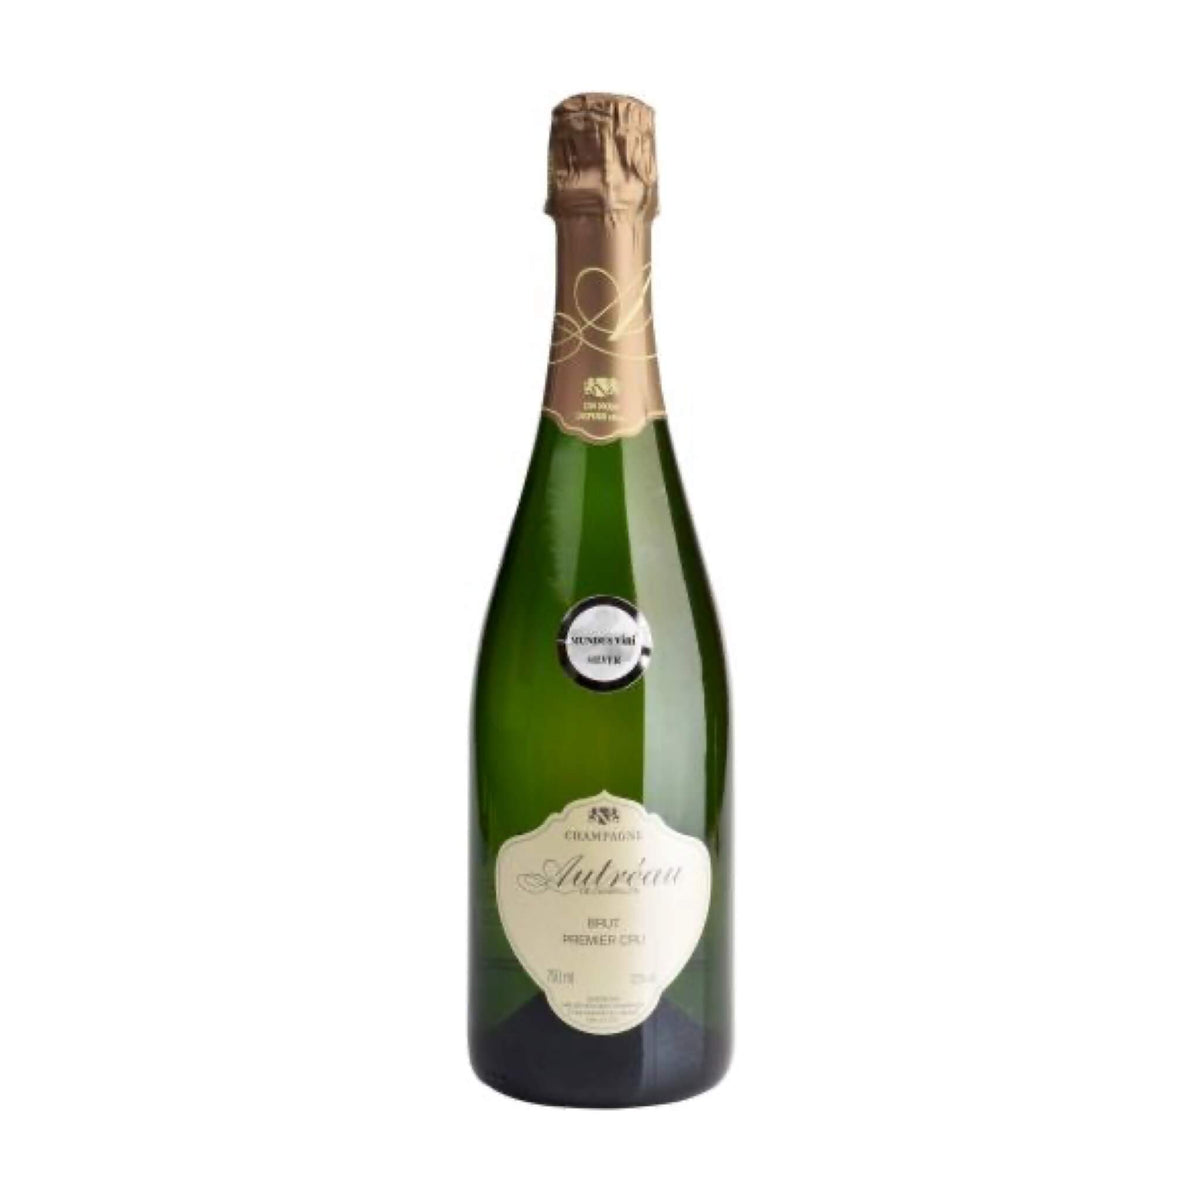 Champagne Autreau-Champagner-Pinot Noir, Pinot Meunier, Chardonnay-Autreau Brut 1er Cru-WINECOM